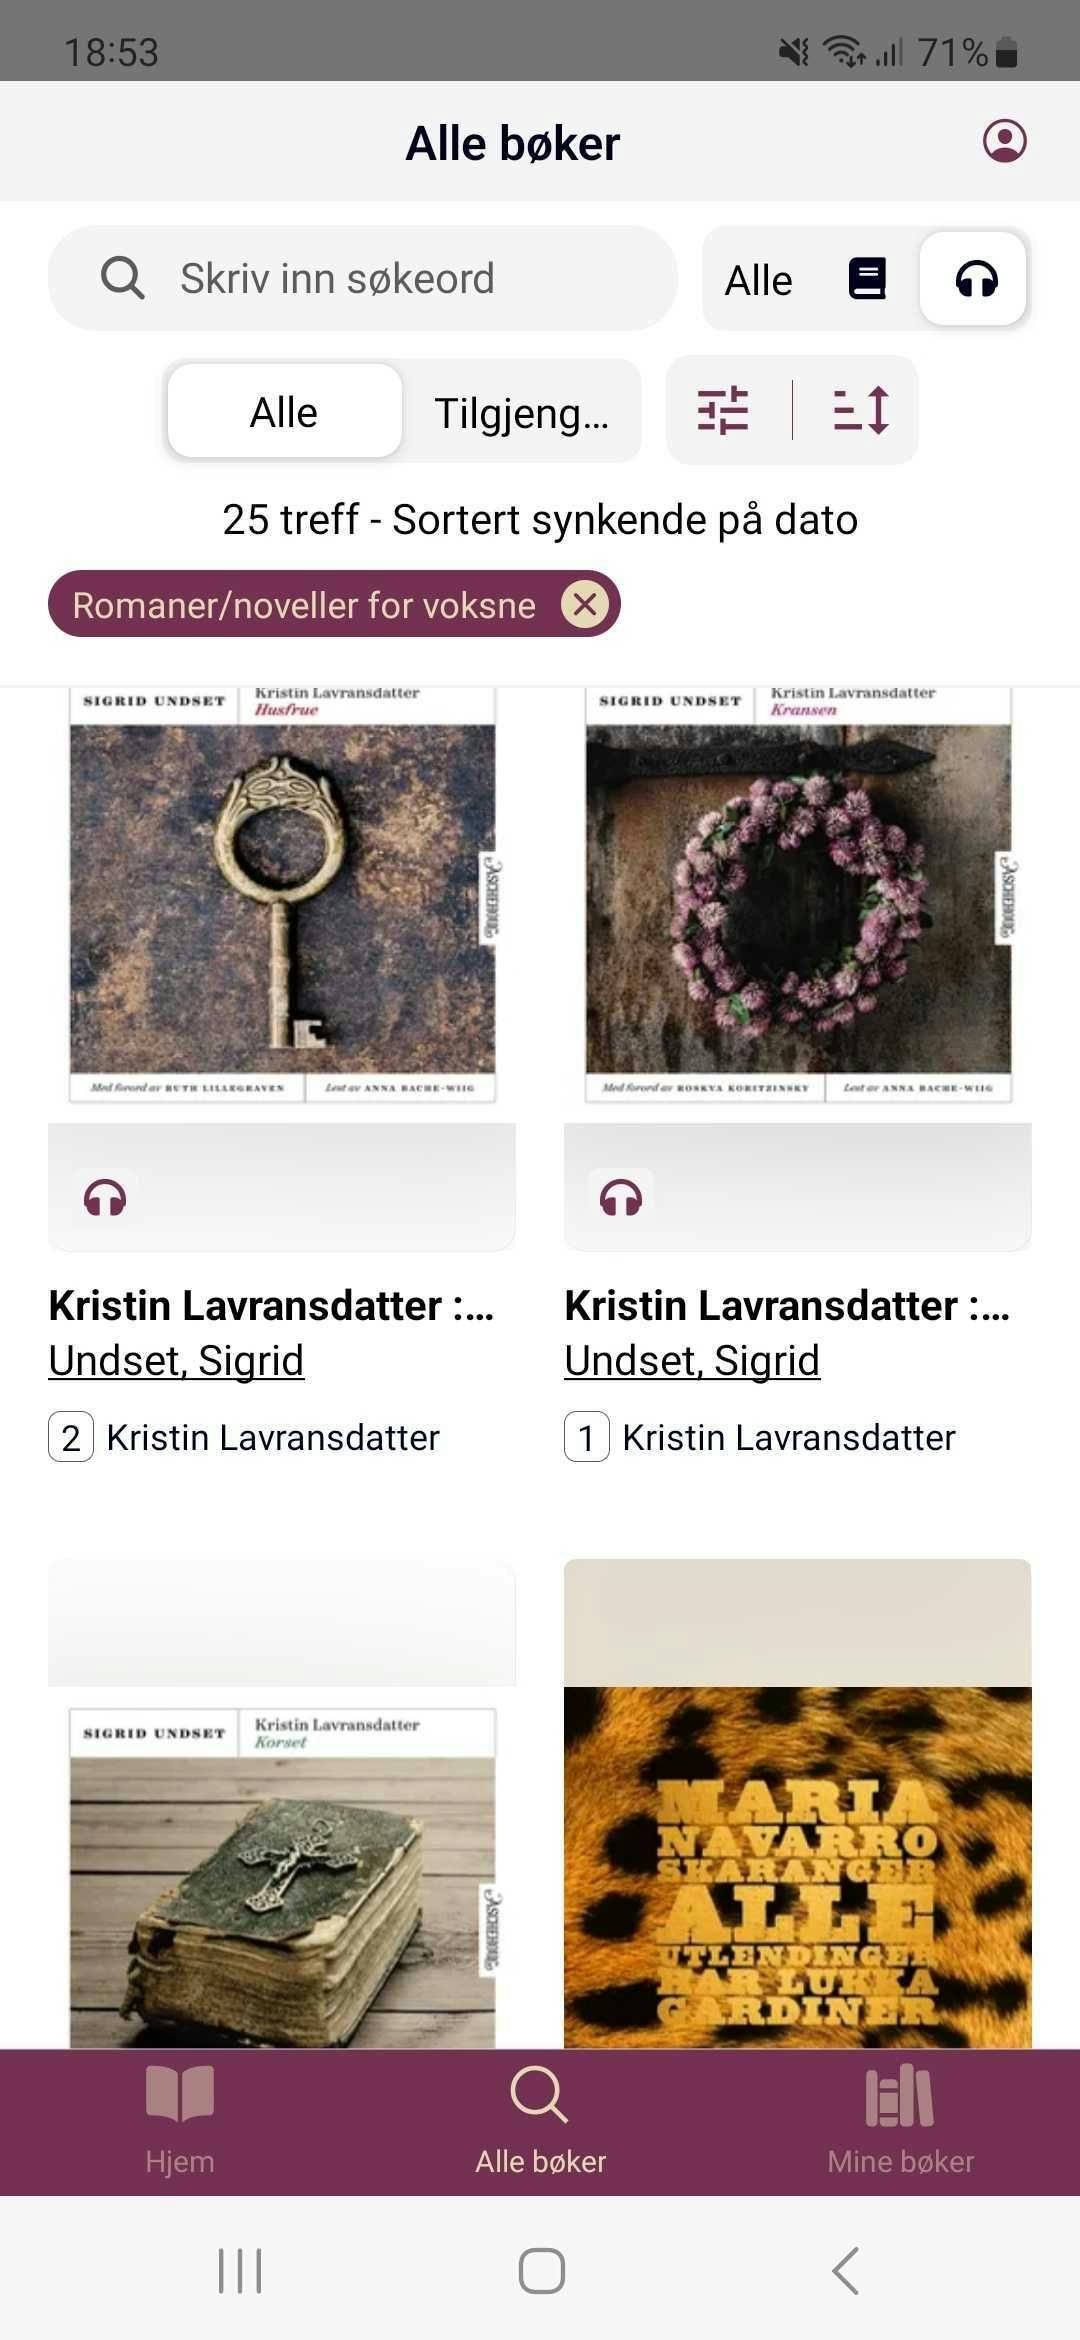 Series information for Kristin Lavransdatter